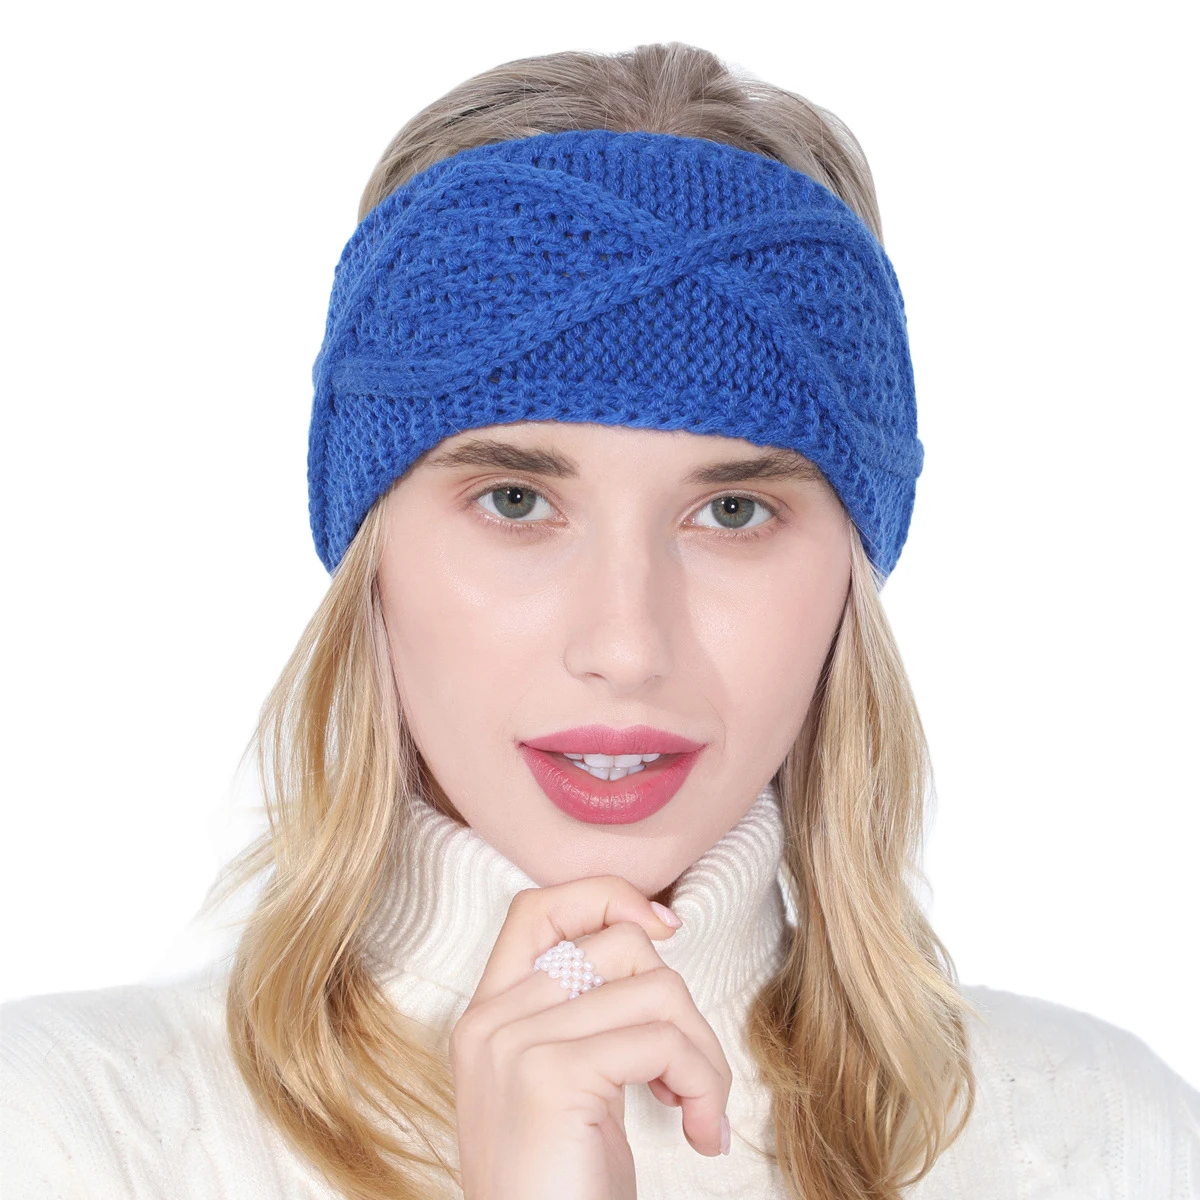 

Warm Winter Headband for Women Cable Crocheted Turban Ear Warmer Headwrap Girl Outdoor Sports Knitted Head Wraps